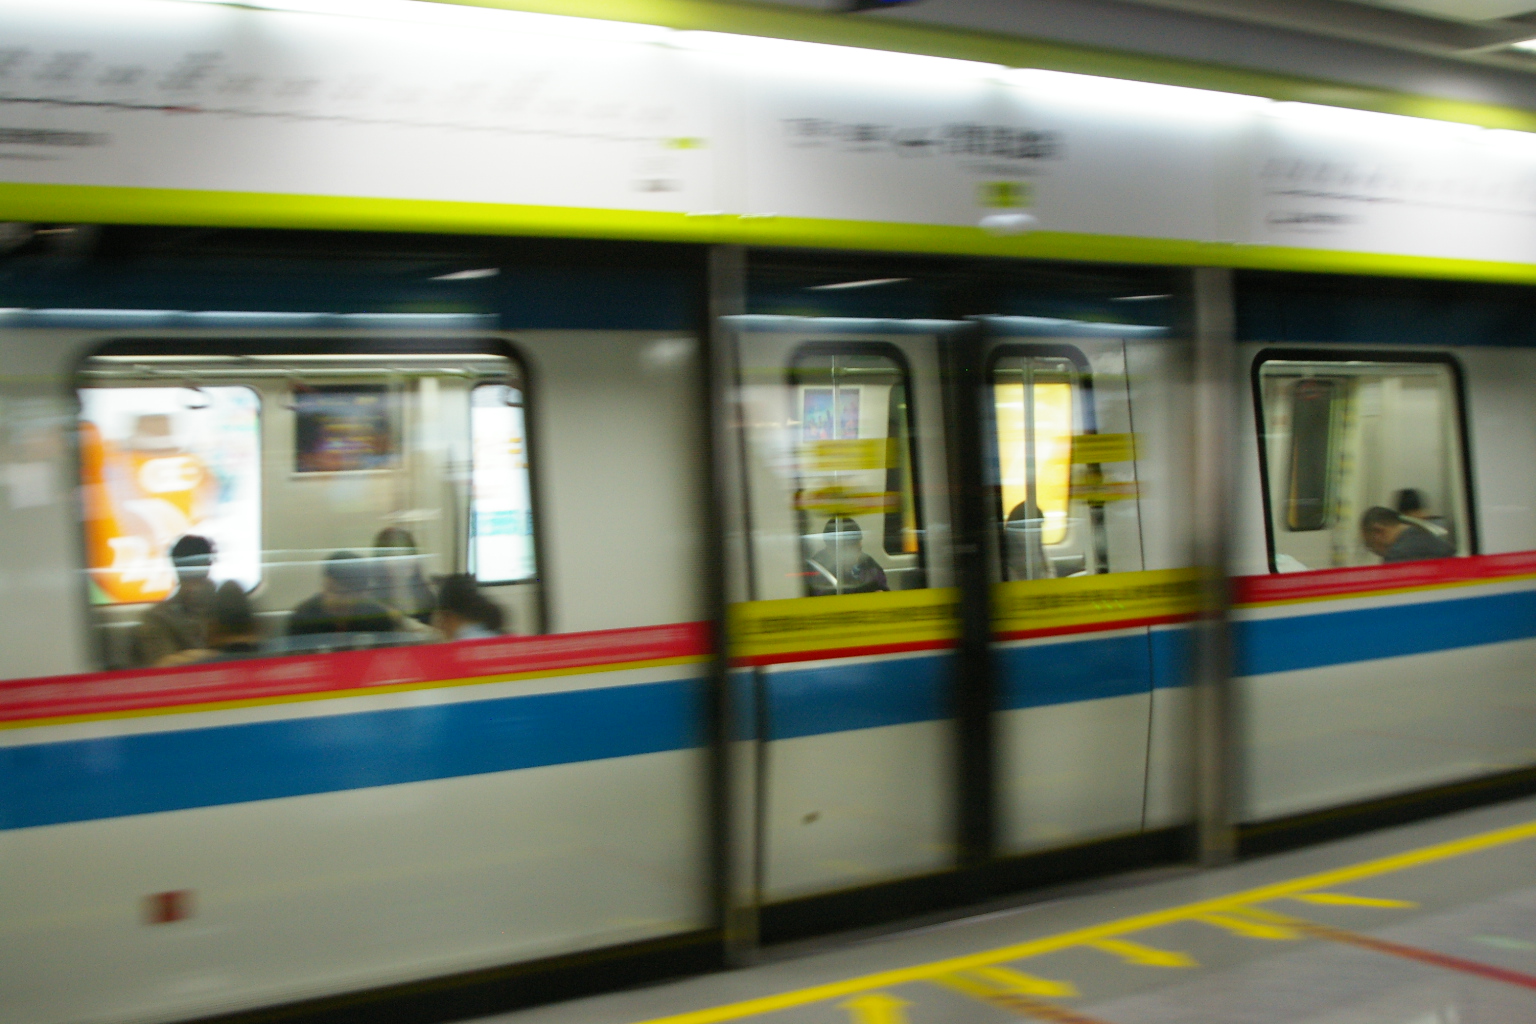 Foshan Metro DKZ29 series in Pujun Beilu, Foshan, Guangdong, China /Mar 19,2014